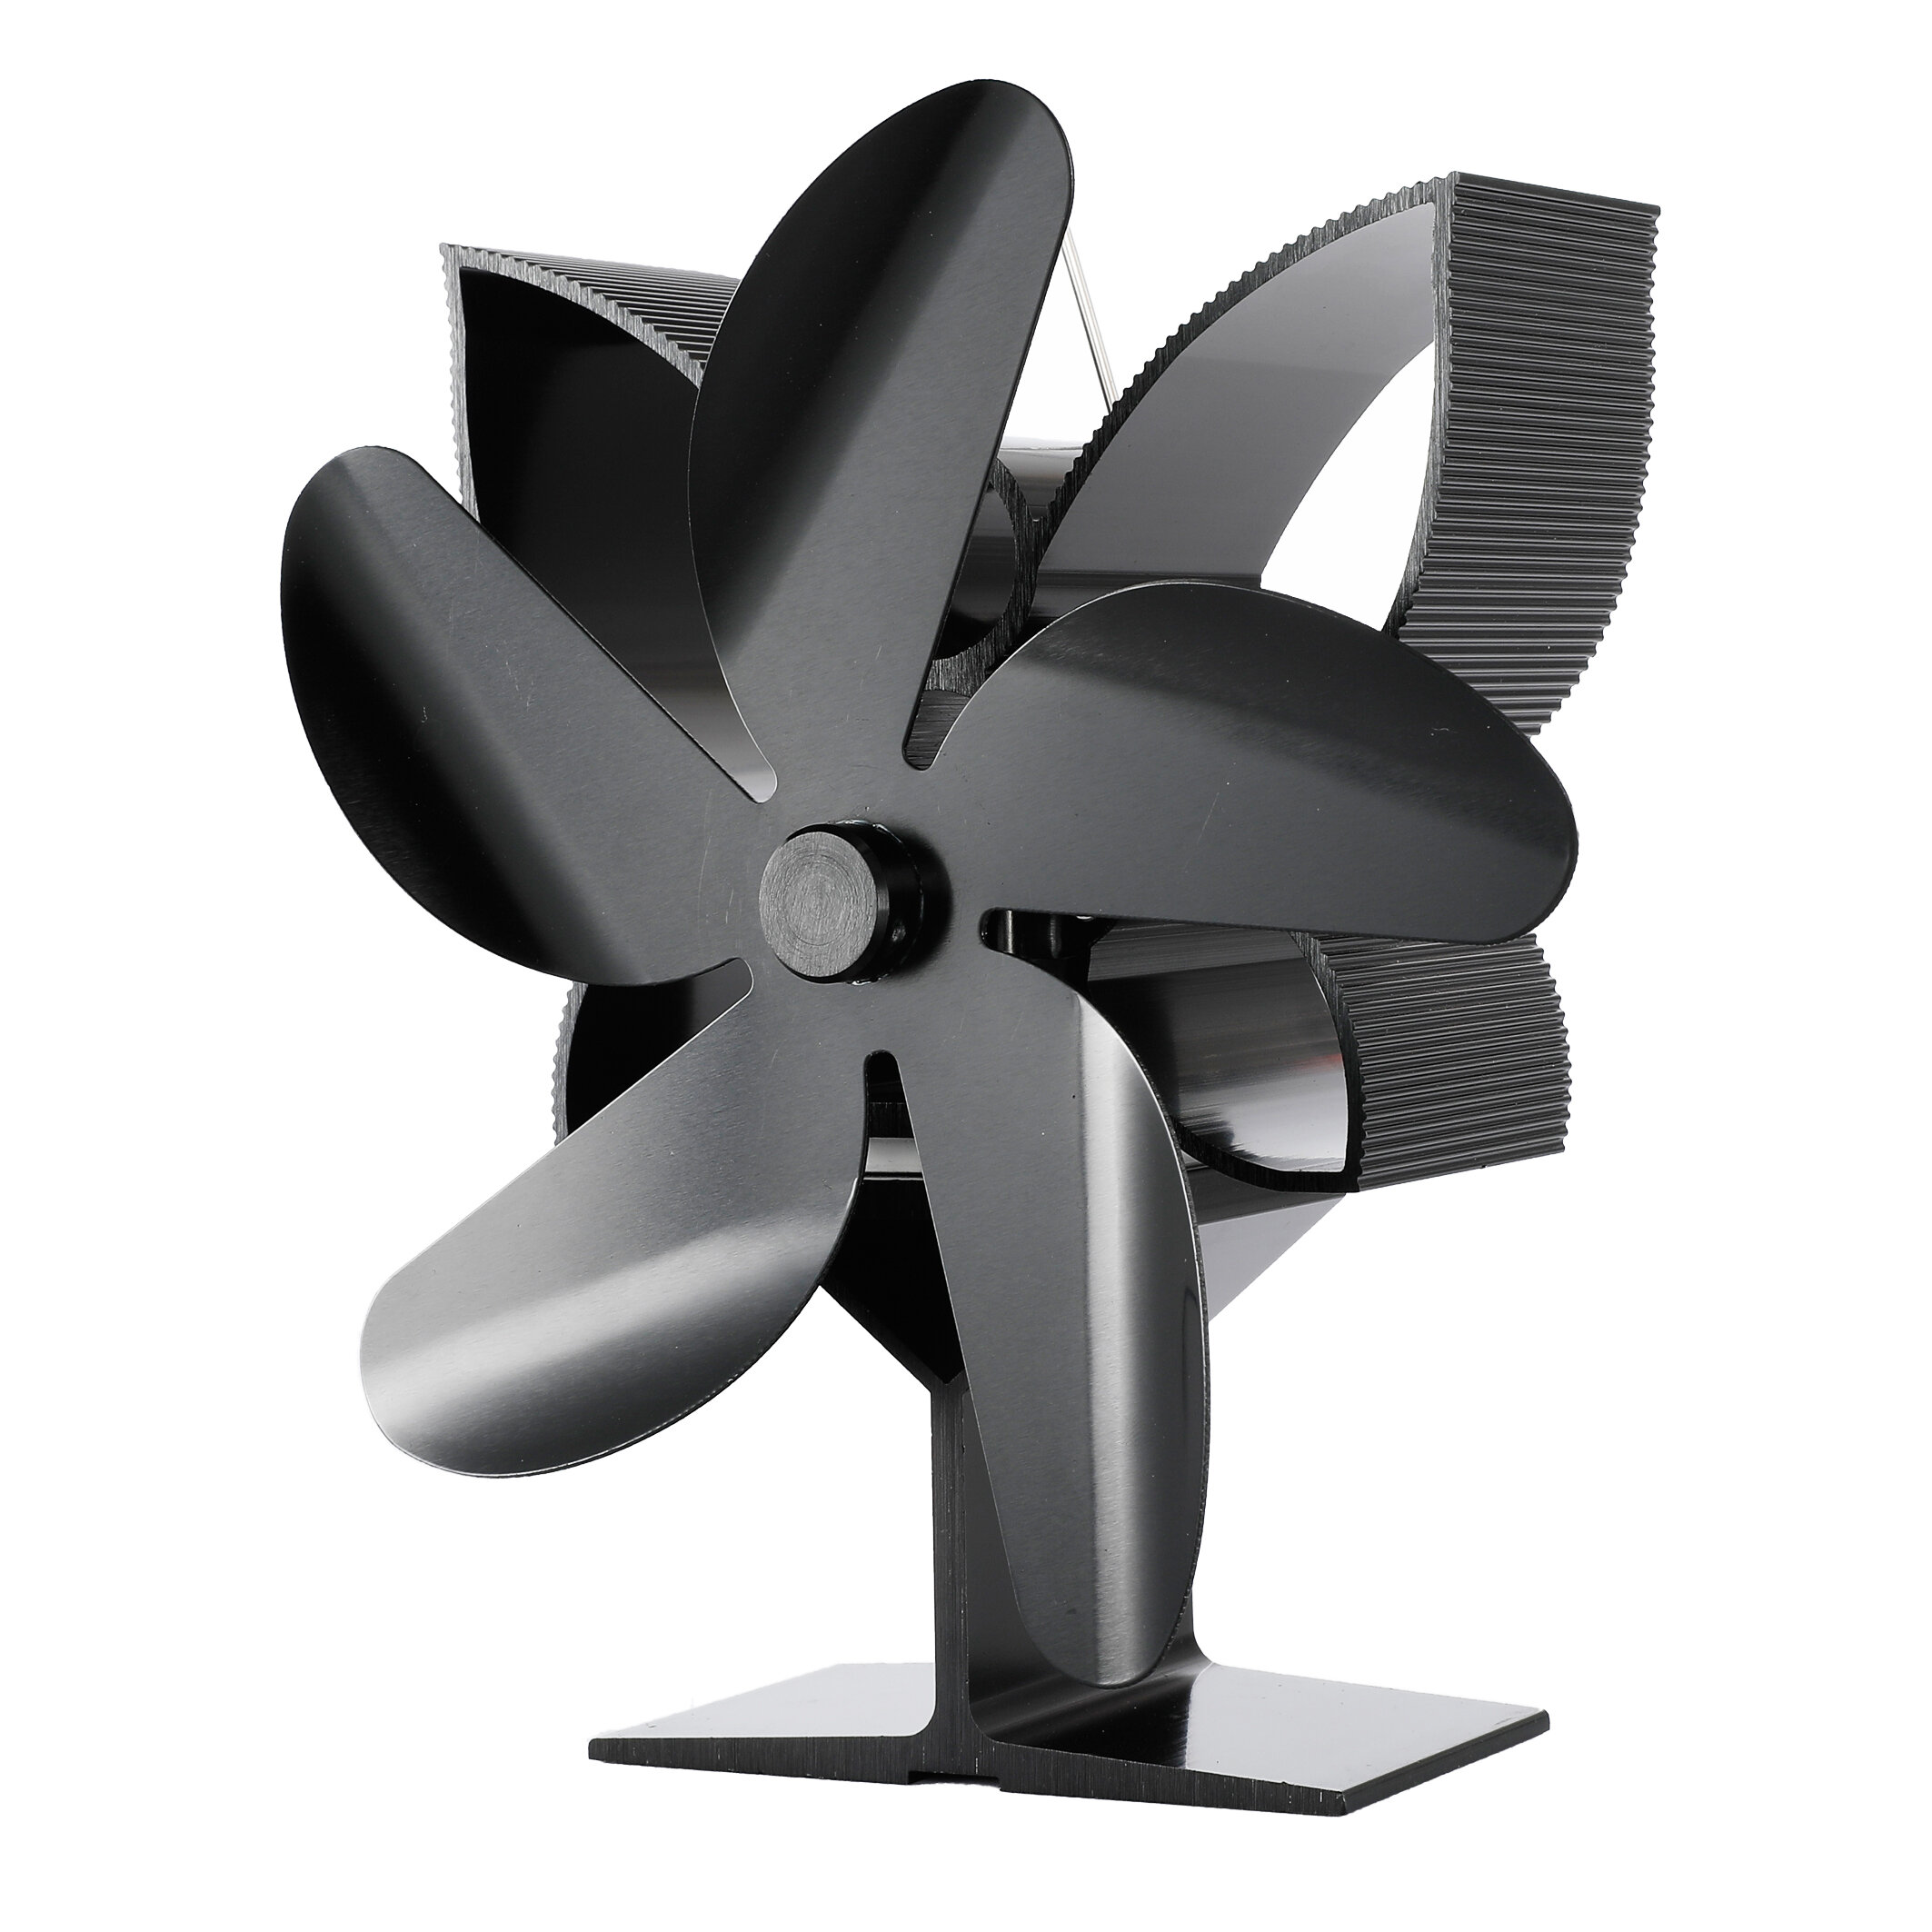 SF901S 5 Blades Fireplace Fan Eco Friendly Quiet Wood Burner Stove Fan Thermal Heat Power Fan Home Christmas Gift